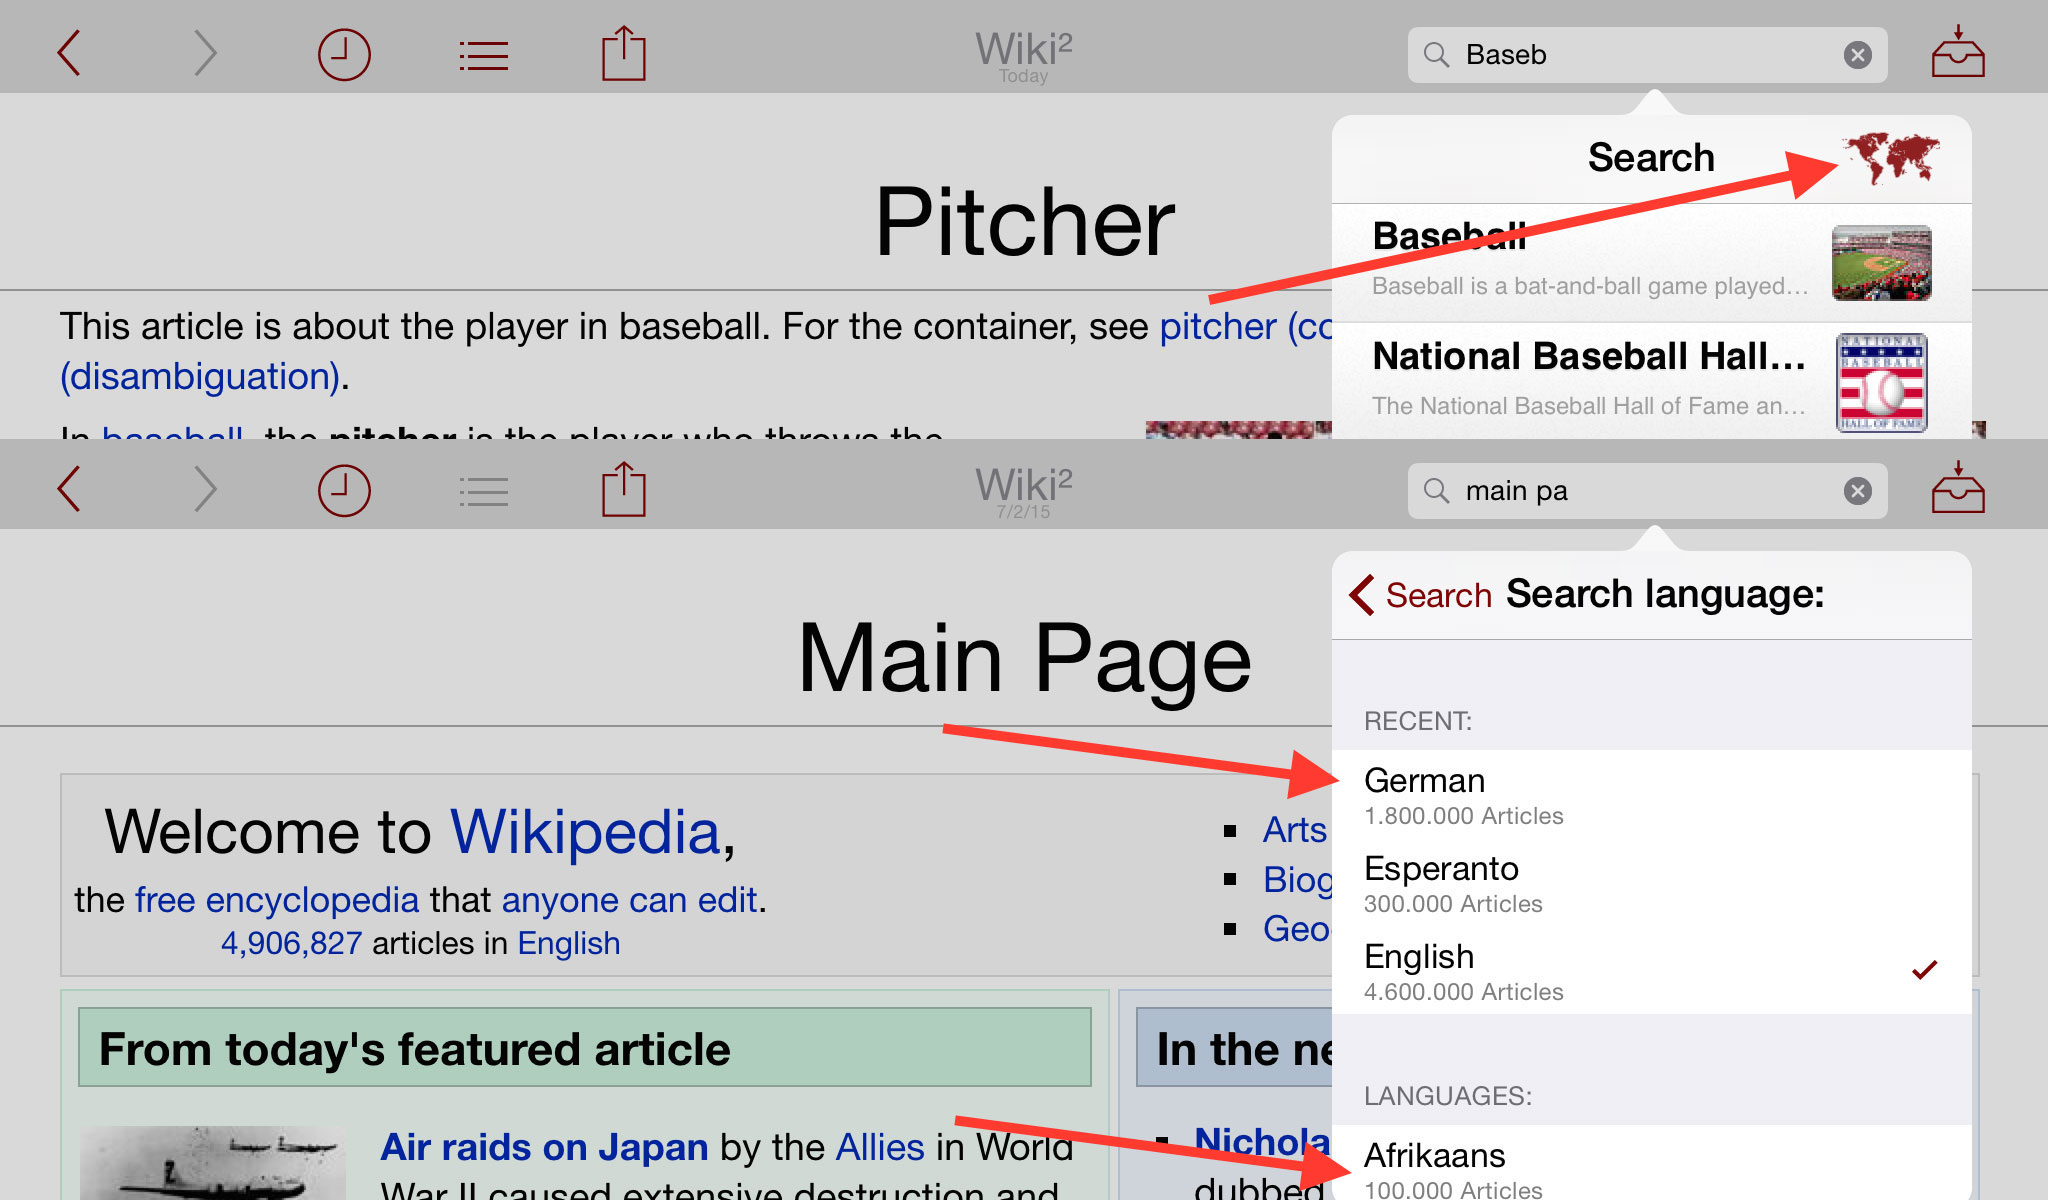 Select the Wikipedia search language